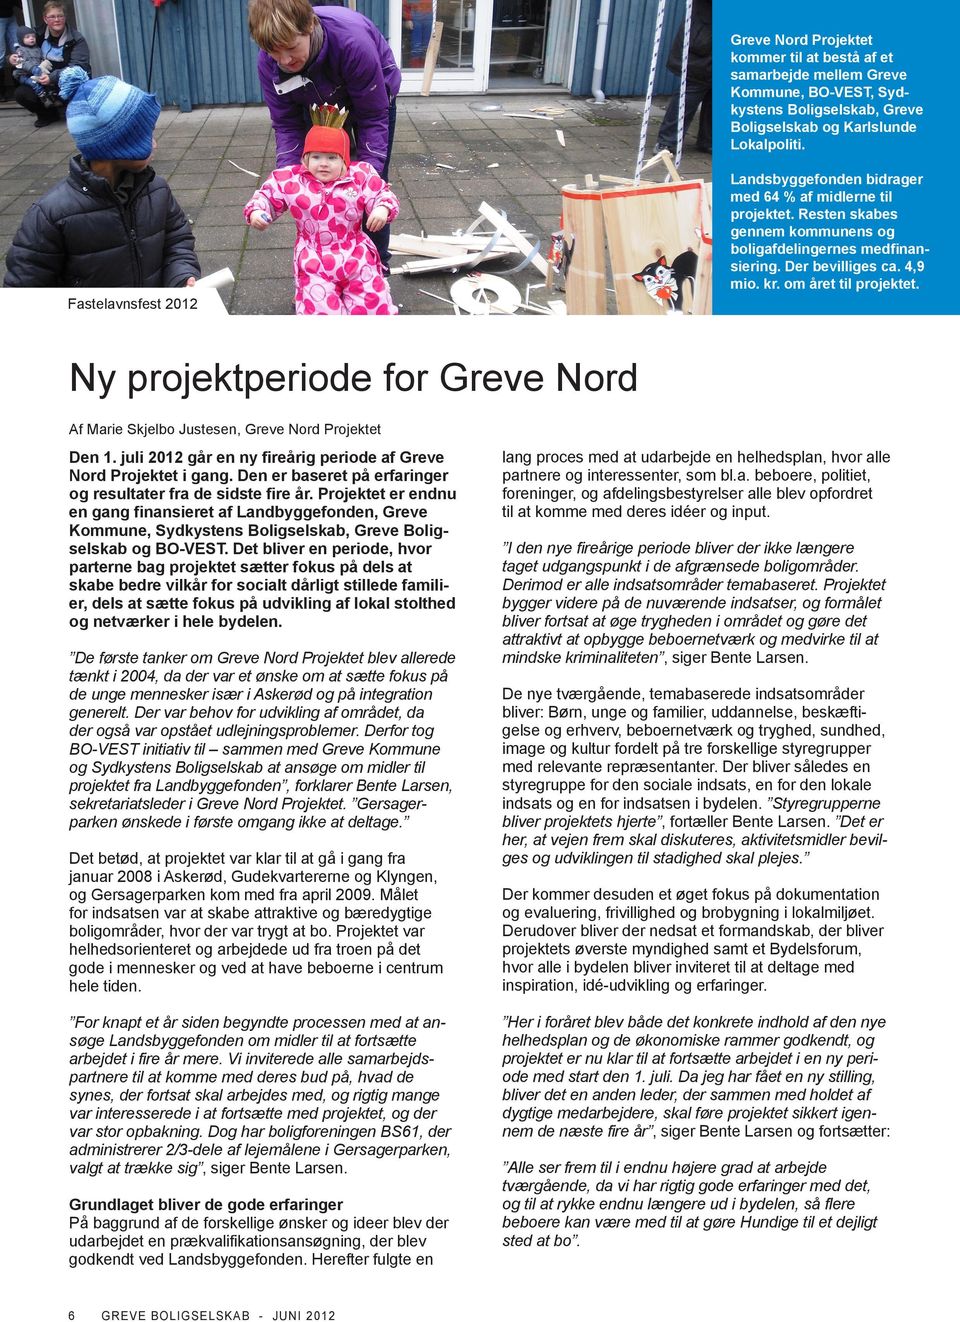 om året til projektet. Ny projektperiode for Greve Nord Af Marie Skjelbo Justesen, Greve Nord Projektet Den 1. juli 2012 går en ny fireårig periode af Greve Nord Projektet i gang.